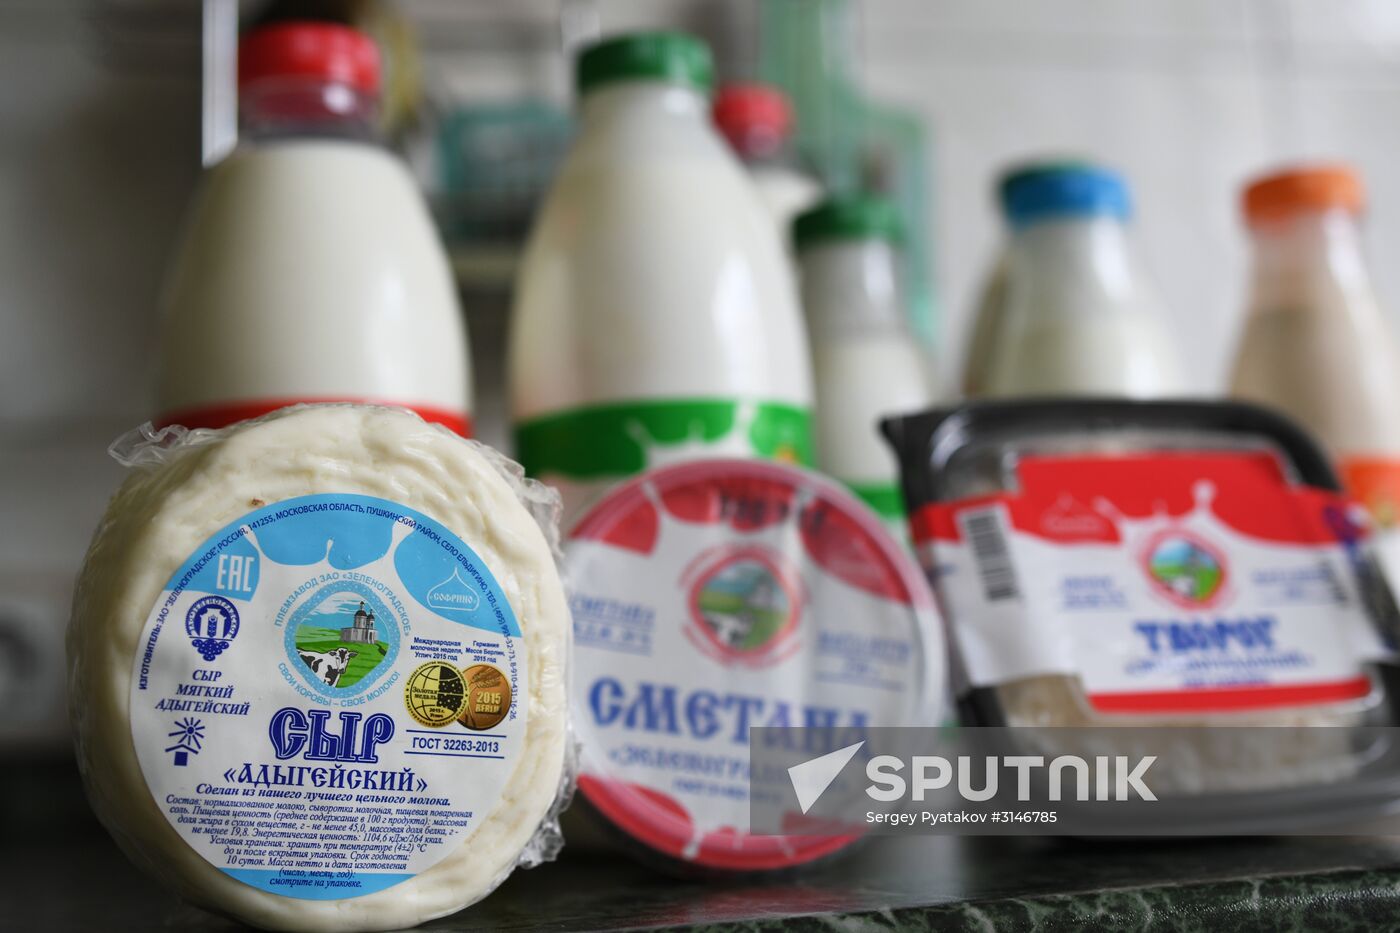 Russian Orthodox Church-owned Zelenogradskoye dairy agro holding